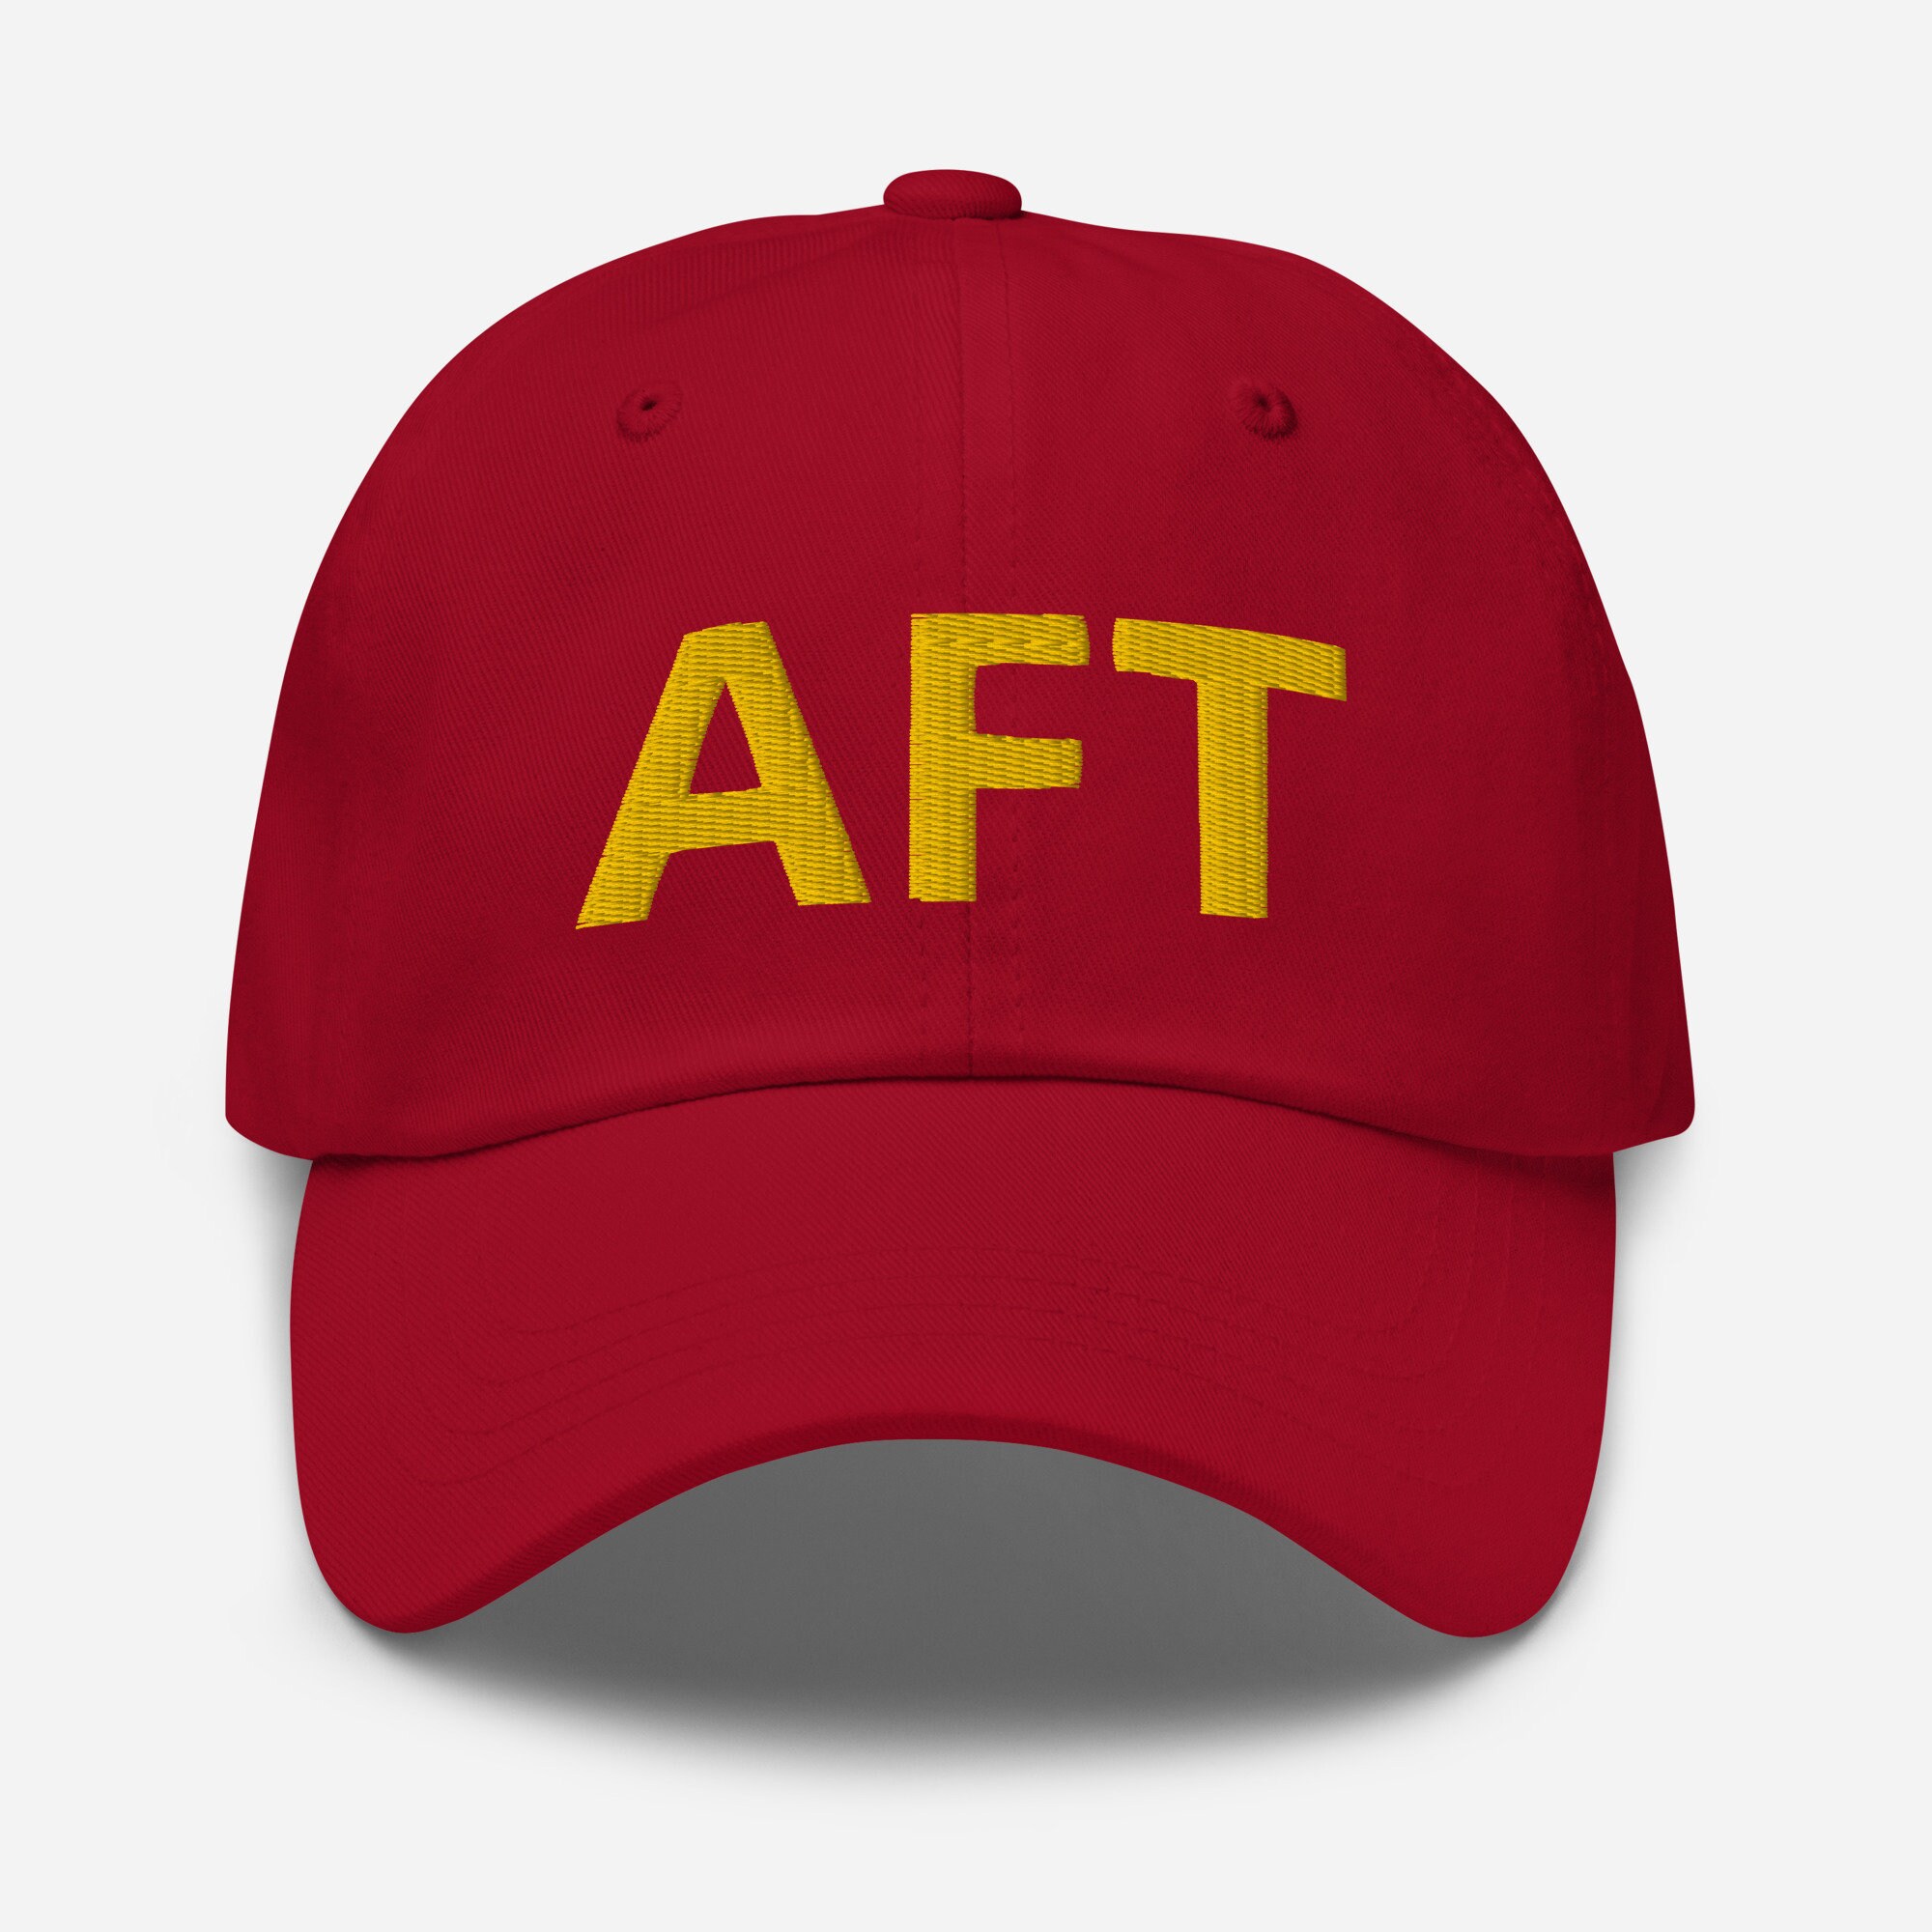 Buy AFT Hat, AFT Cap, AFT Gift, American Federation of Teachers, Teacher Hat,  Worker's Union Hat, Union Gifts, Teacher Gifts, Education Hat Online in  India 